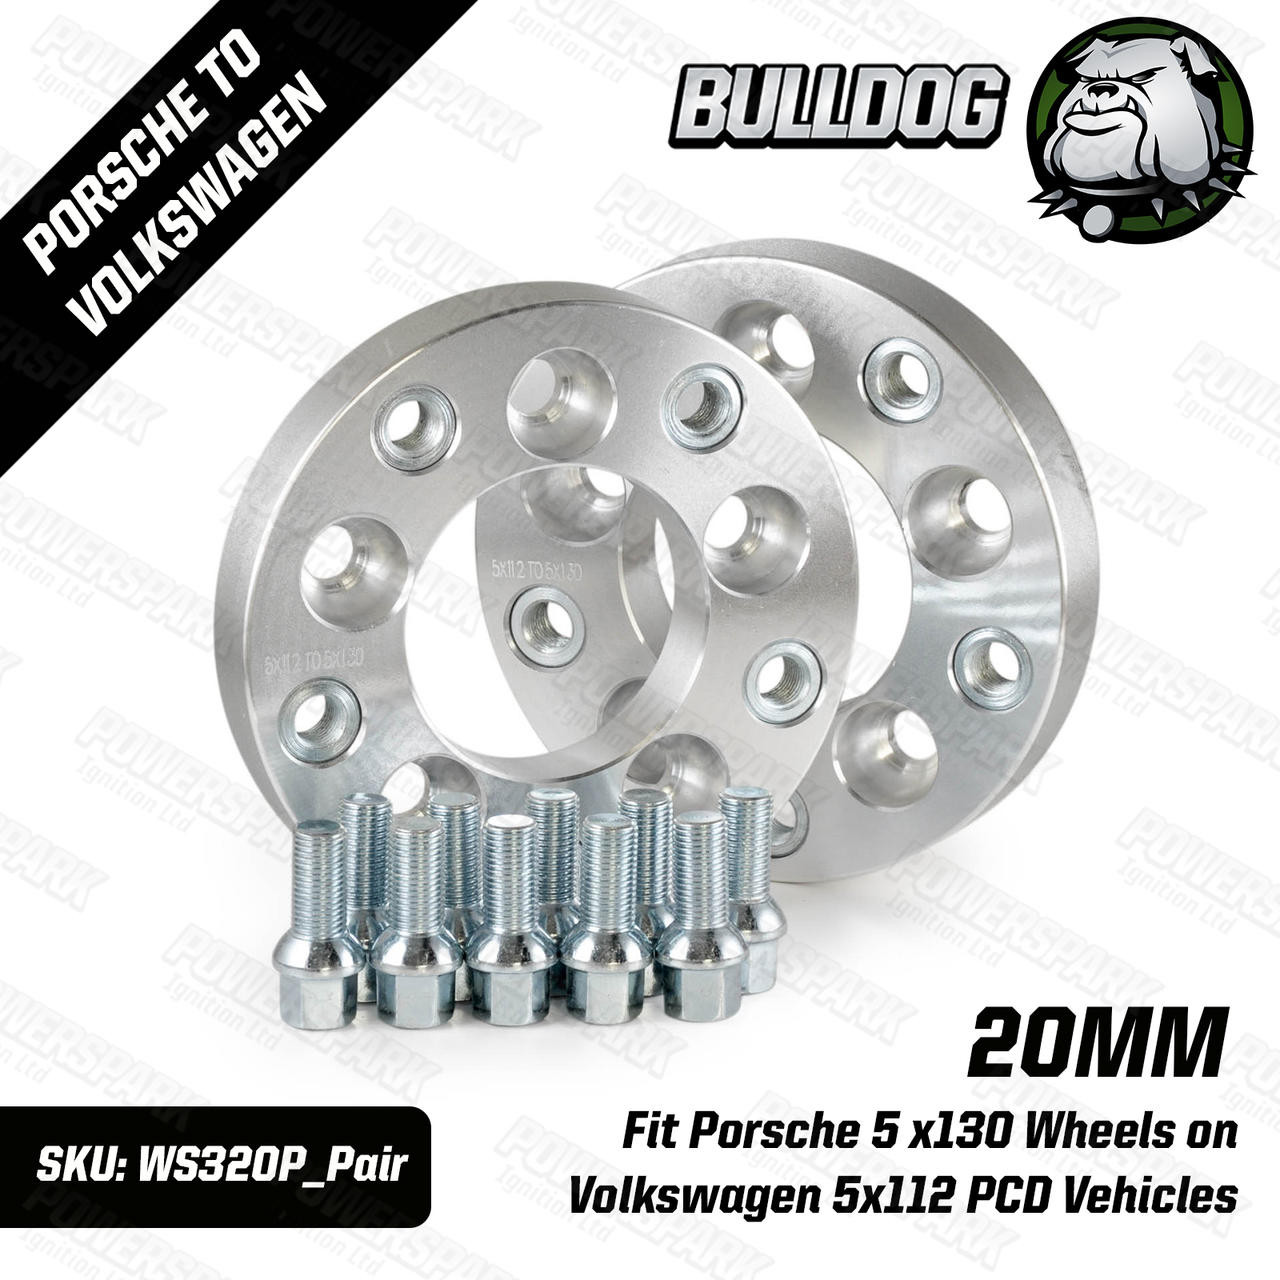 Bulldog 20mm Wheel Adapters to put Porsche 5 x130 Wheels on Volkswagen 5x112 PCD Vehicles Set of 2